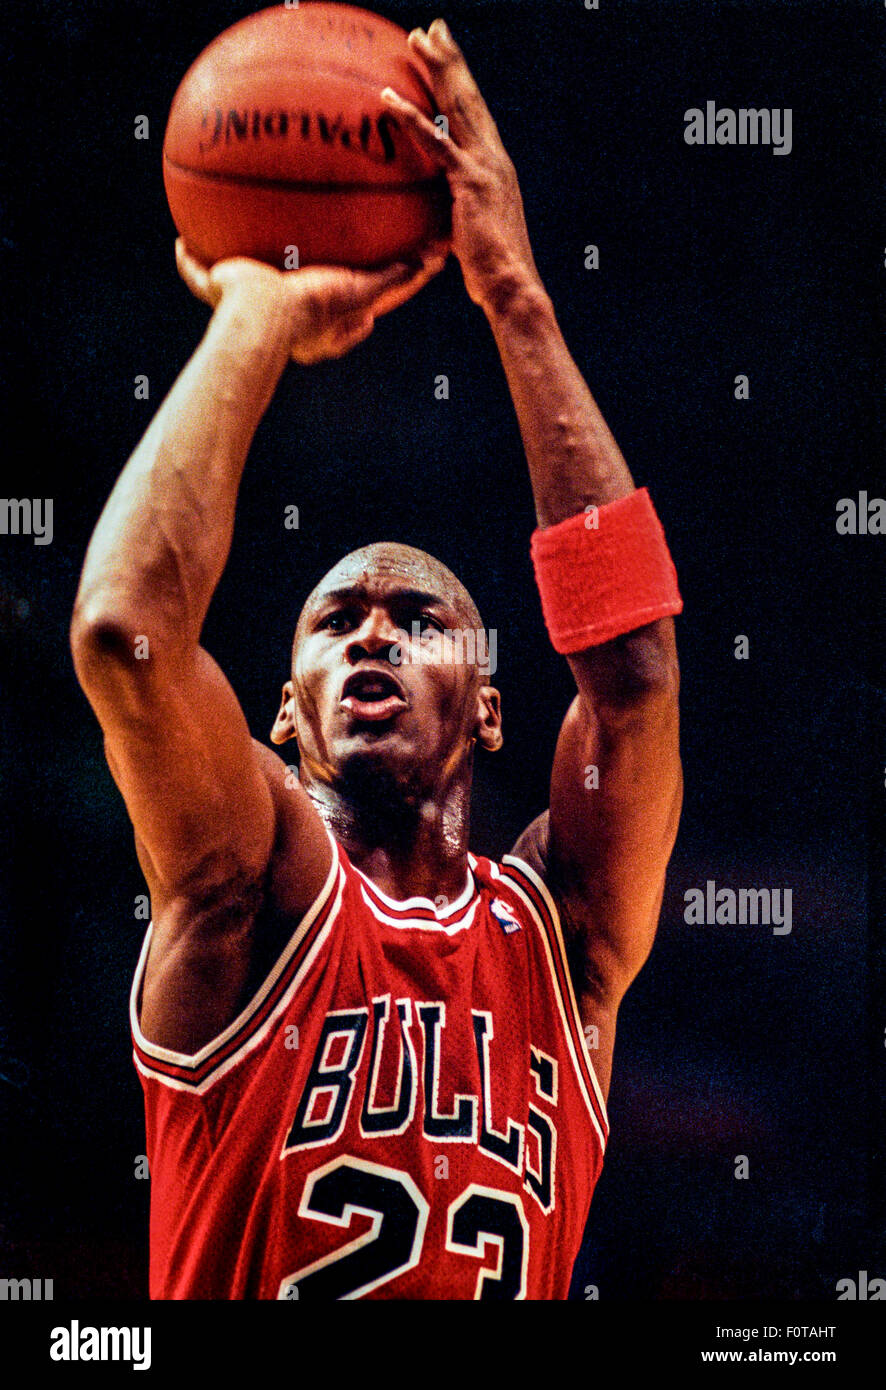 Michael Jordan competing for the NBA Chicago Bulls Stock Photo